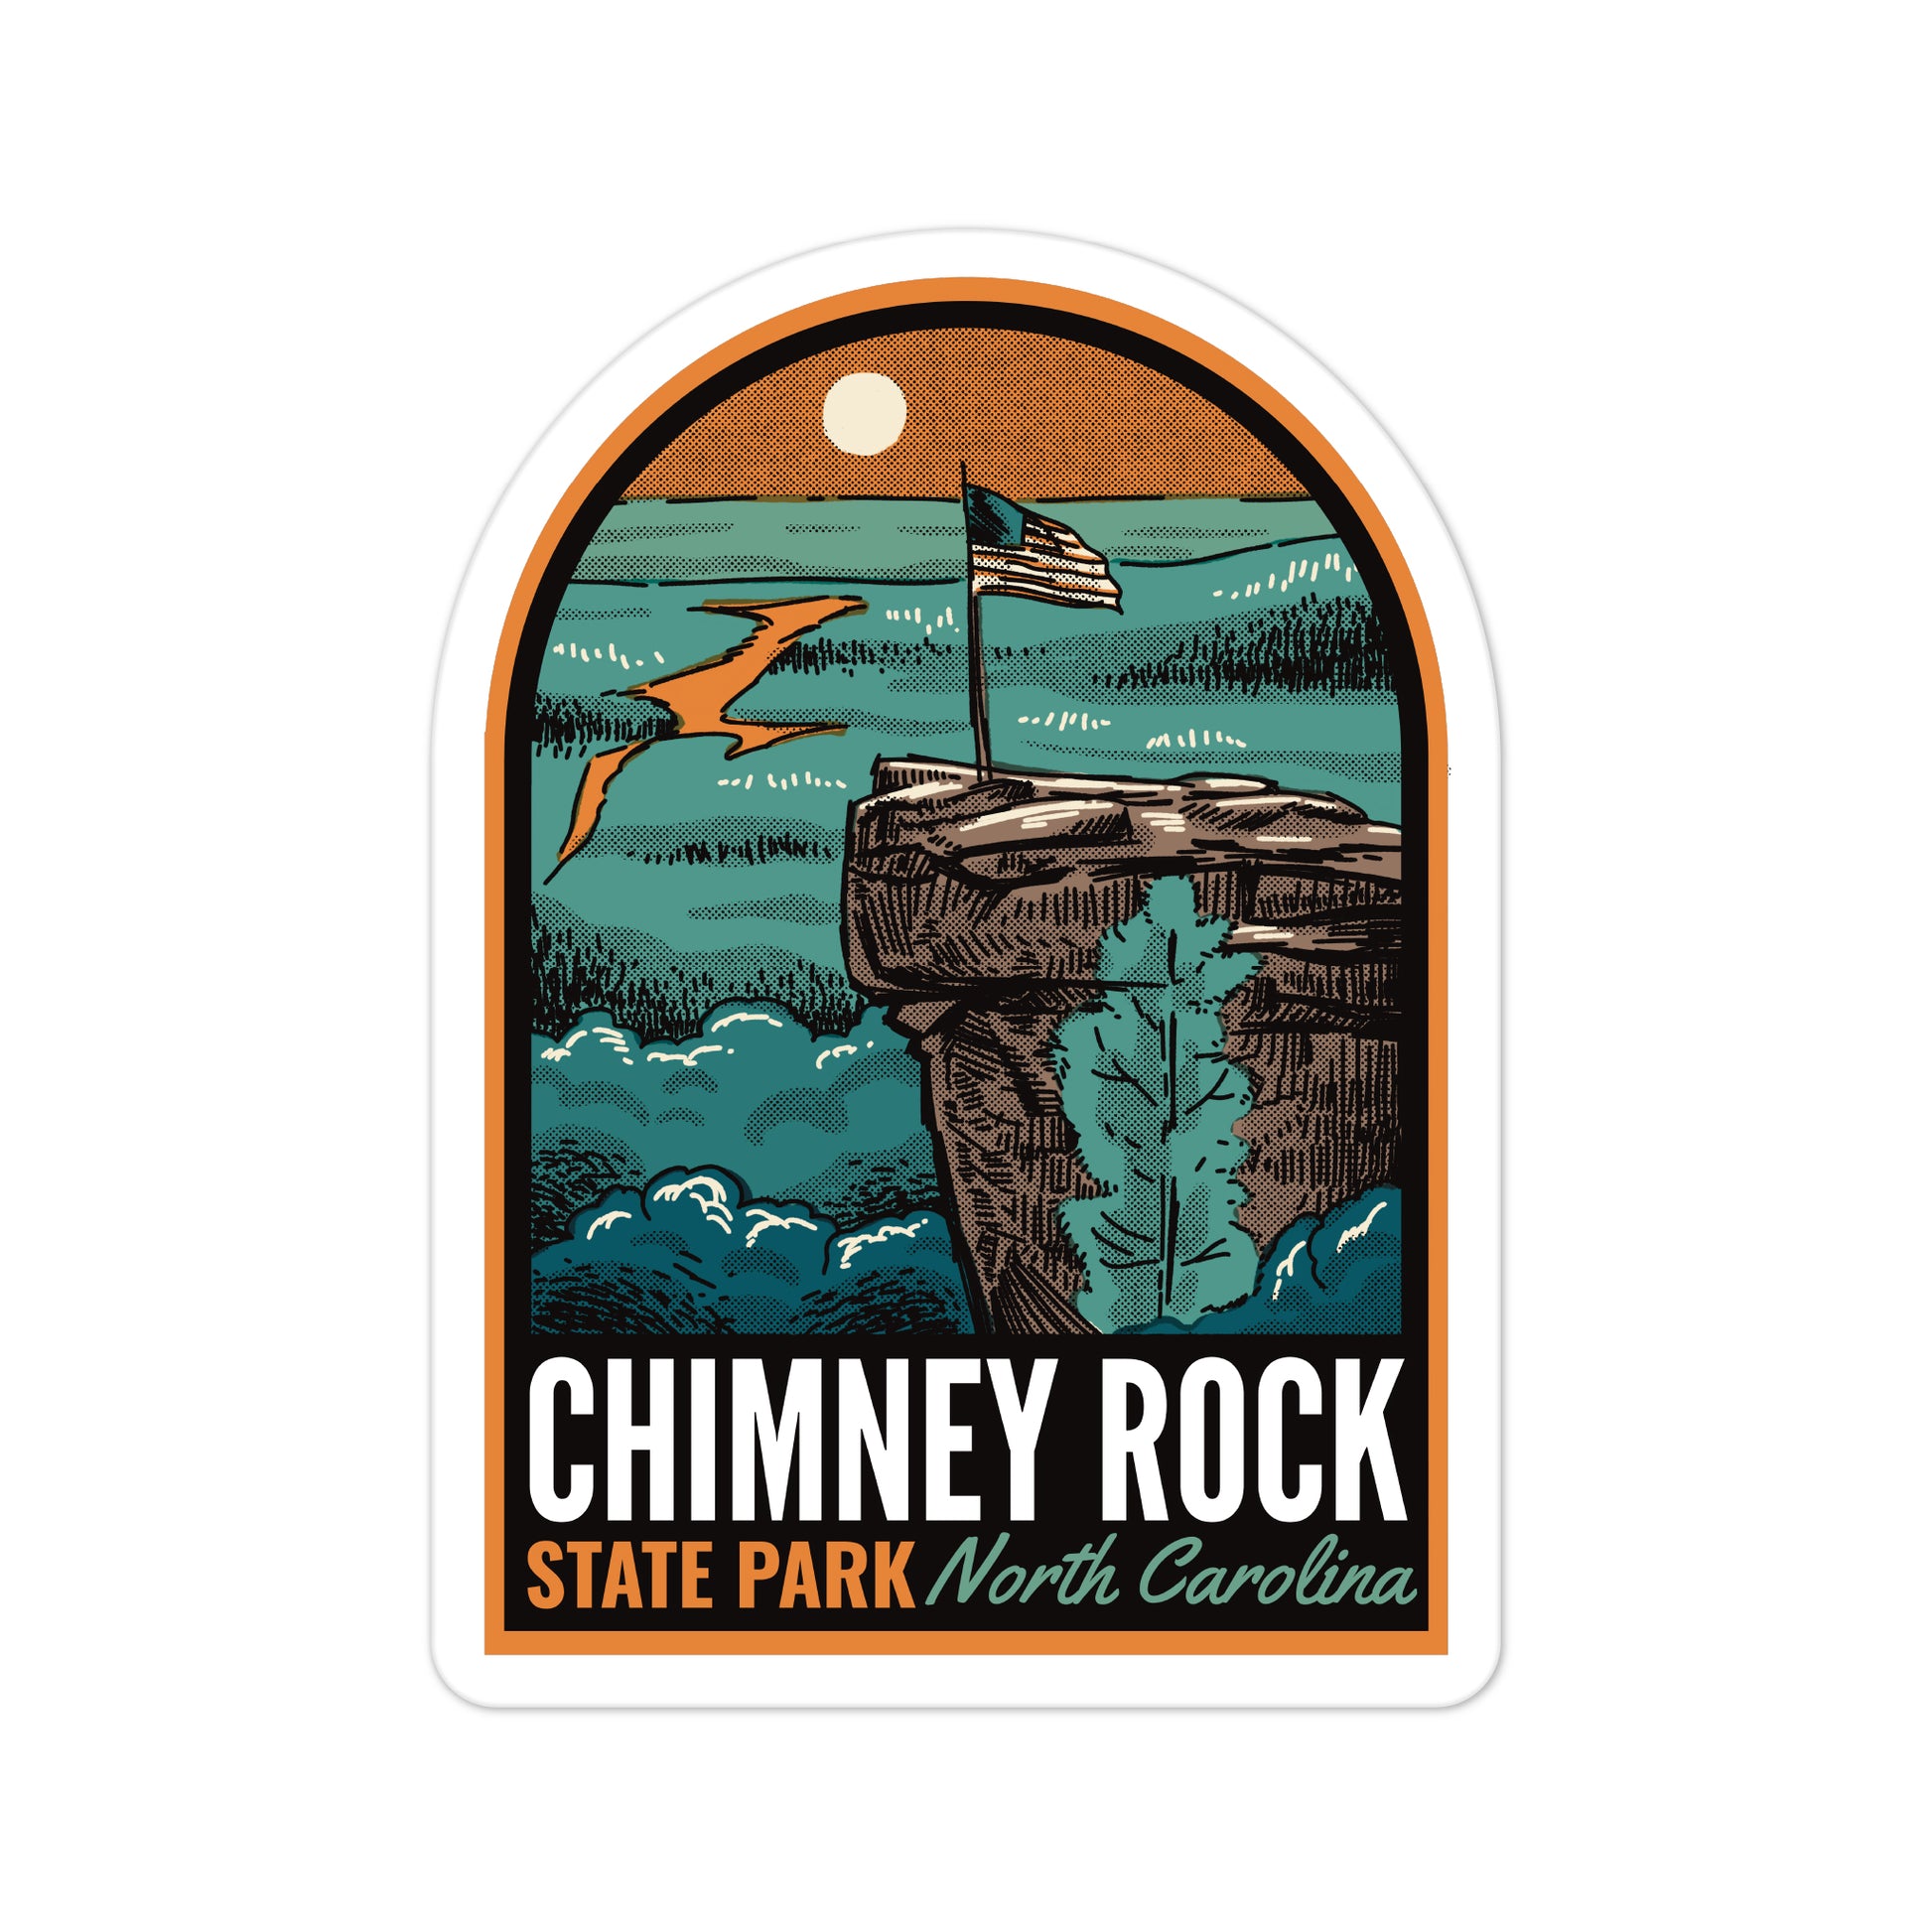 A sticker of Chimney Rock State Park